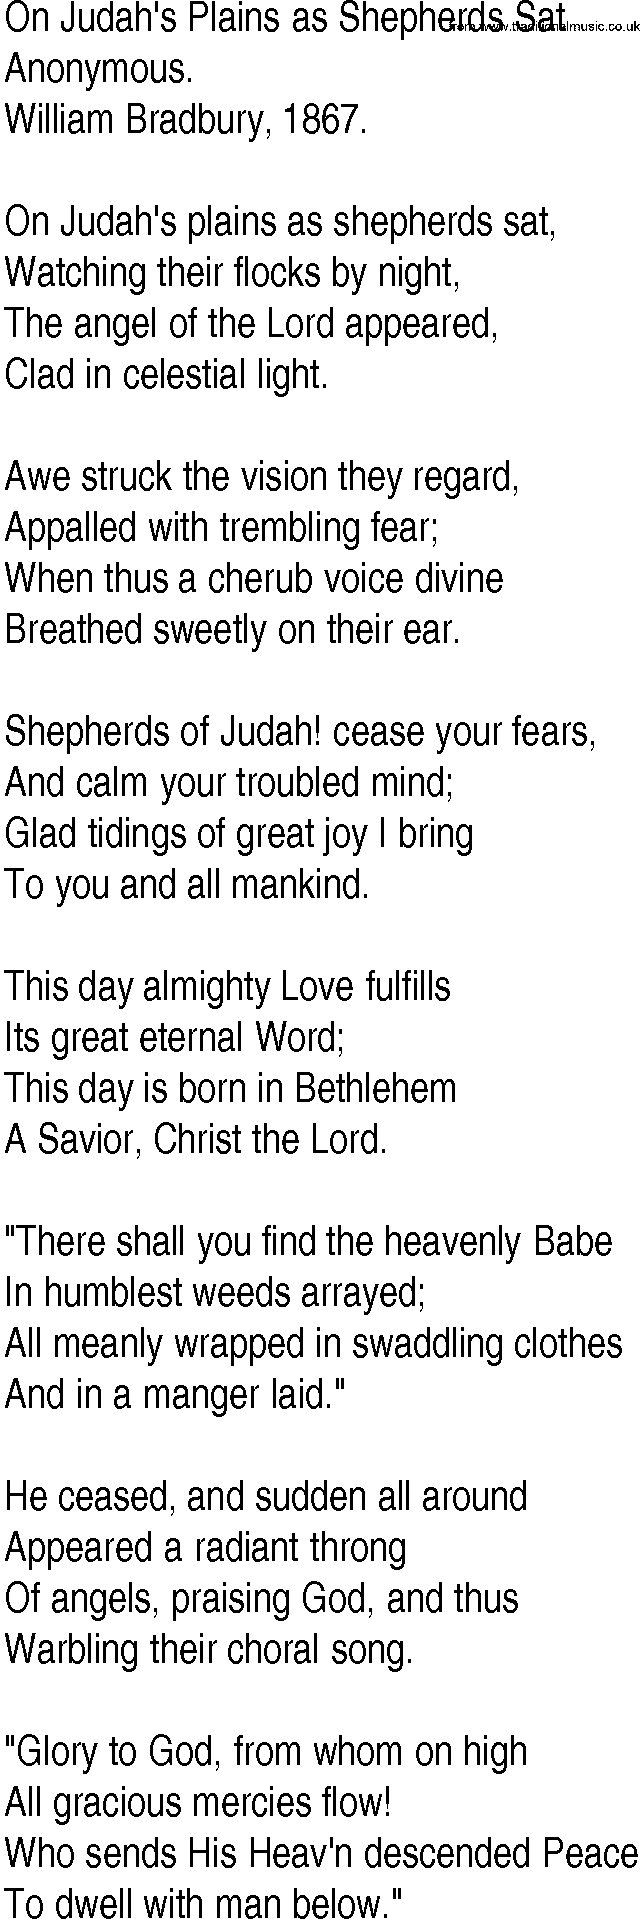 Hymn and Gospel Song: On Judah's Plains as Shepherds Sat by Anonymous lyrics